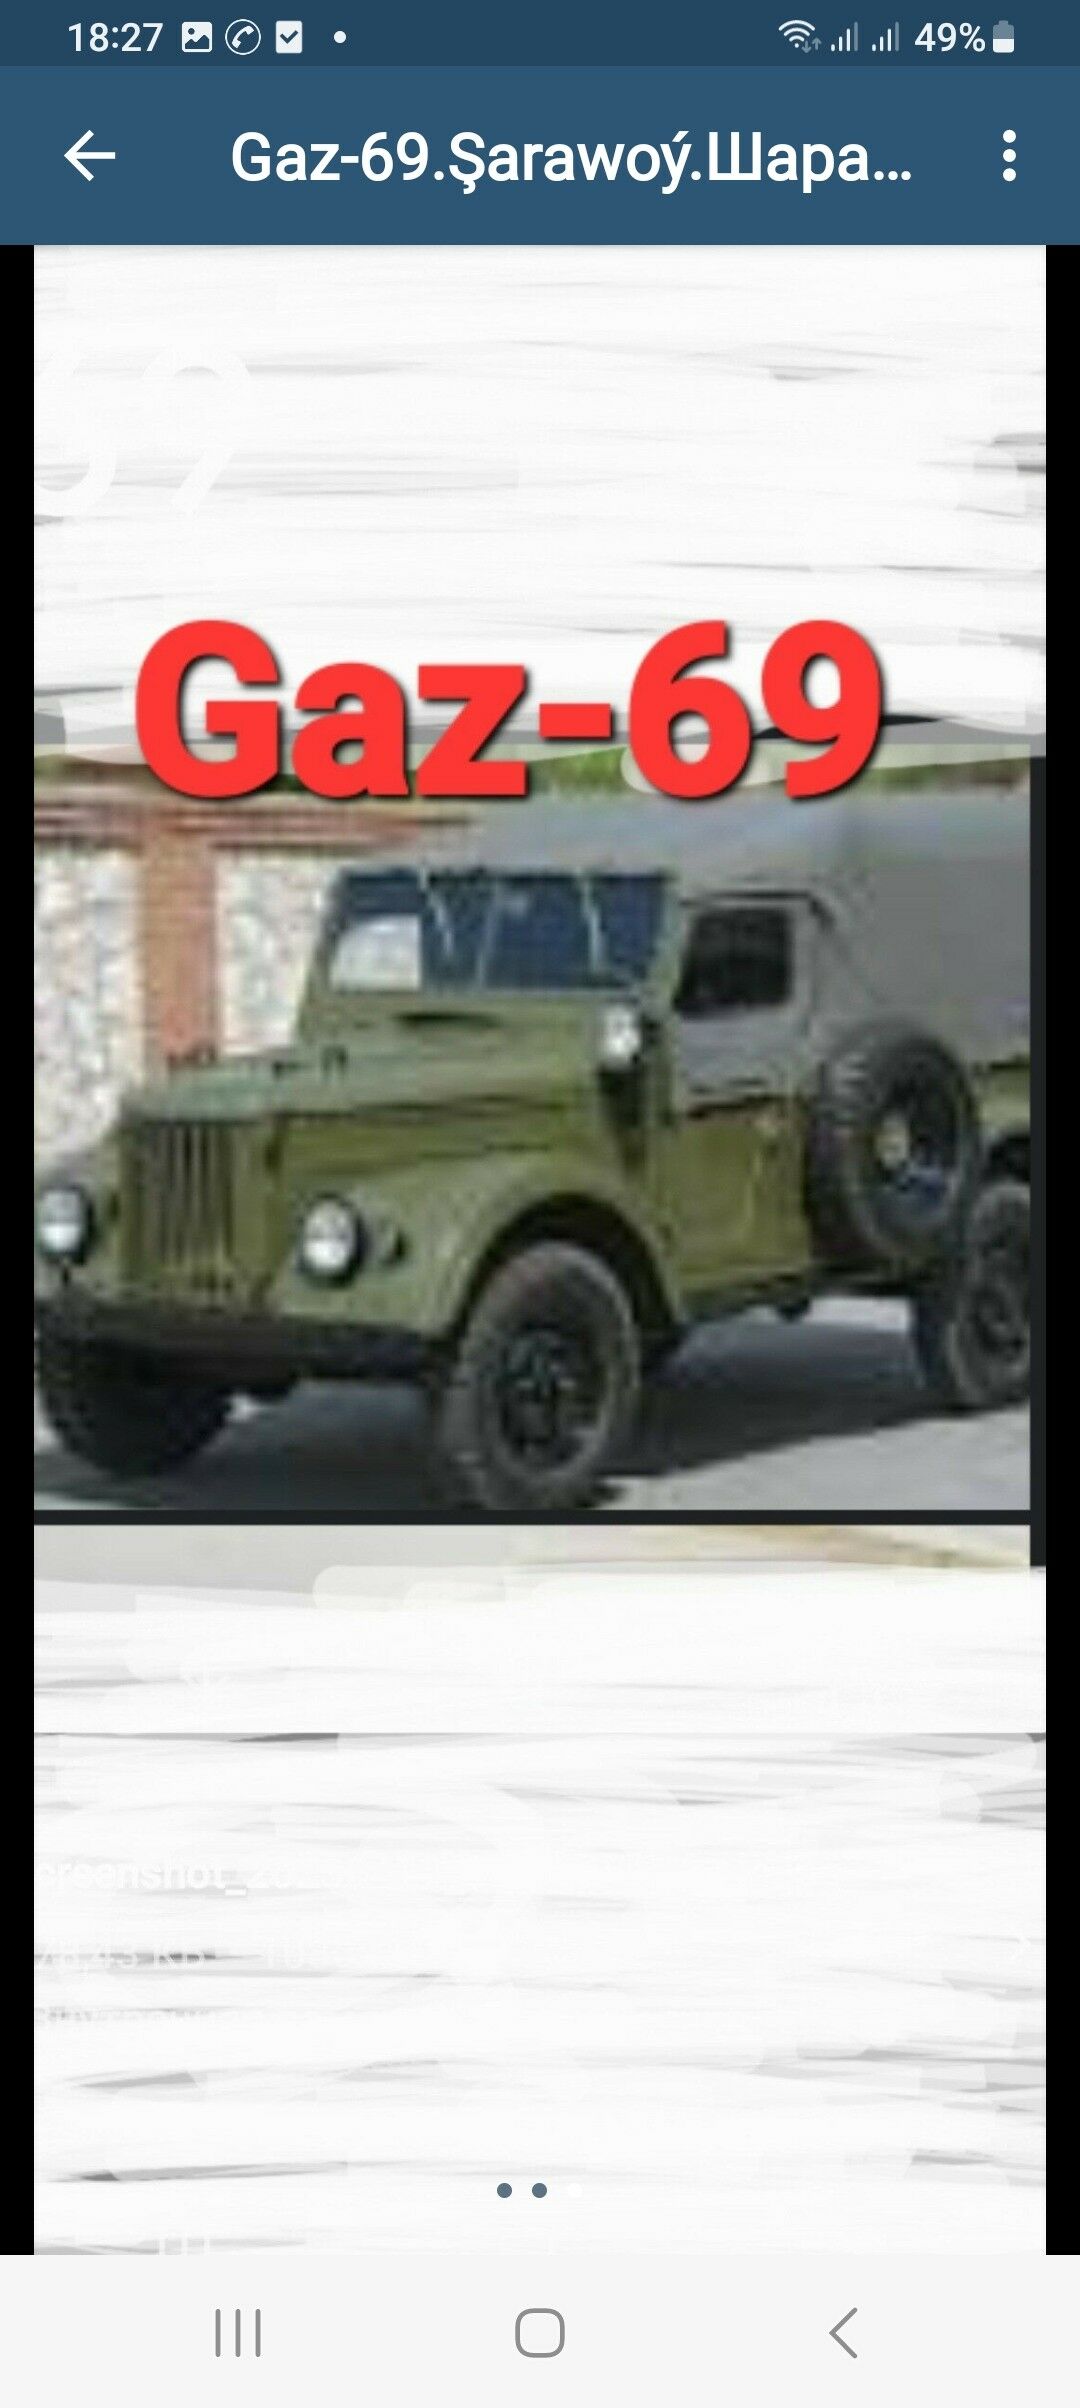 Gaz-69.Koropka zapças 400 TMT - Ruhabat (90-njy razýezd) - img 4